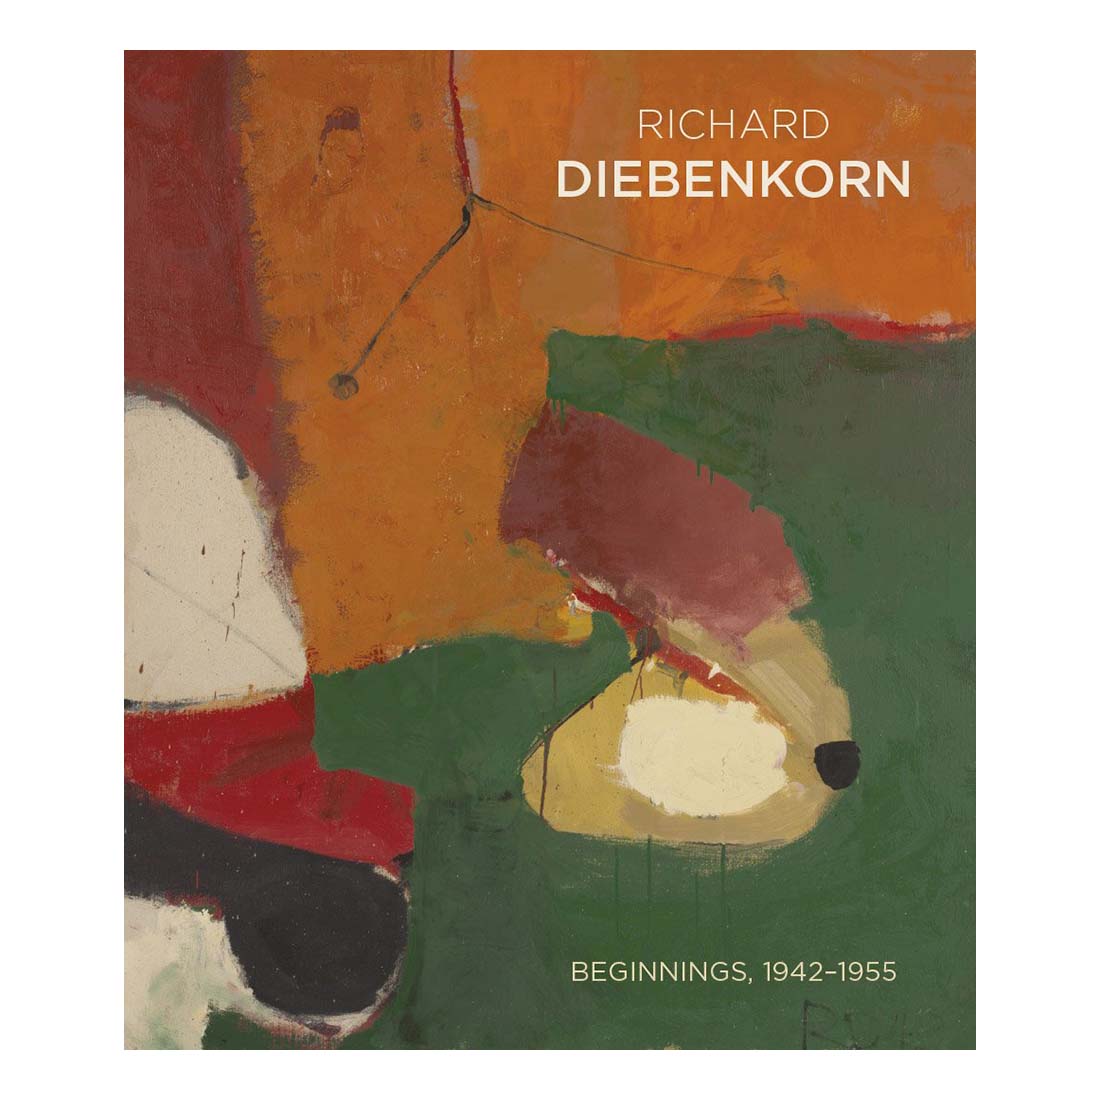 Richard Diebenkorn: Beginnings, 1942-1955